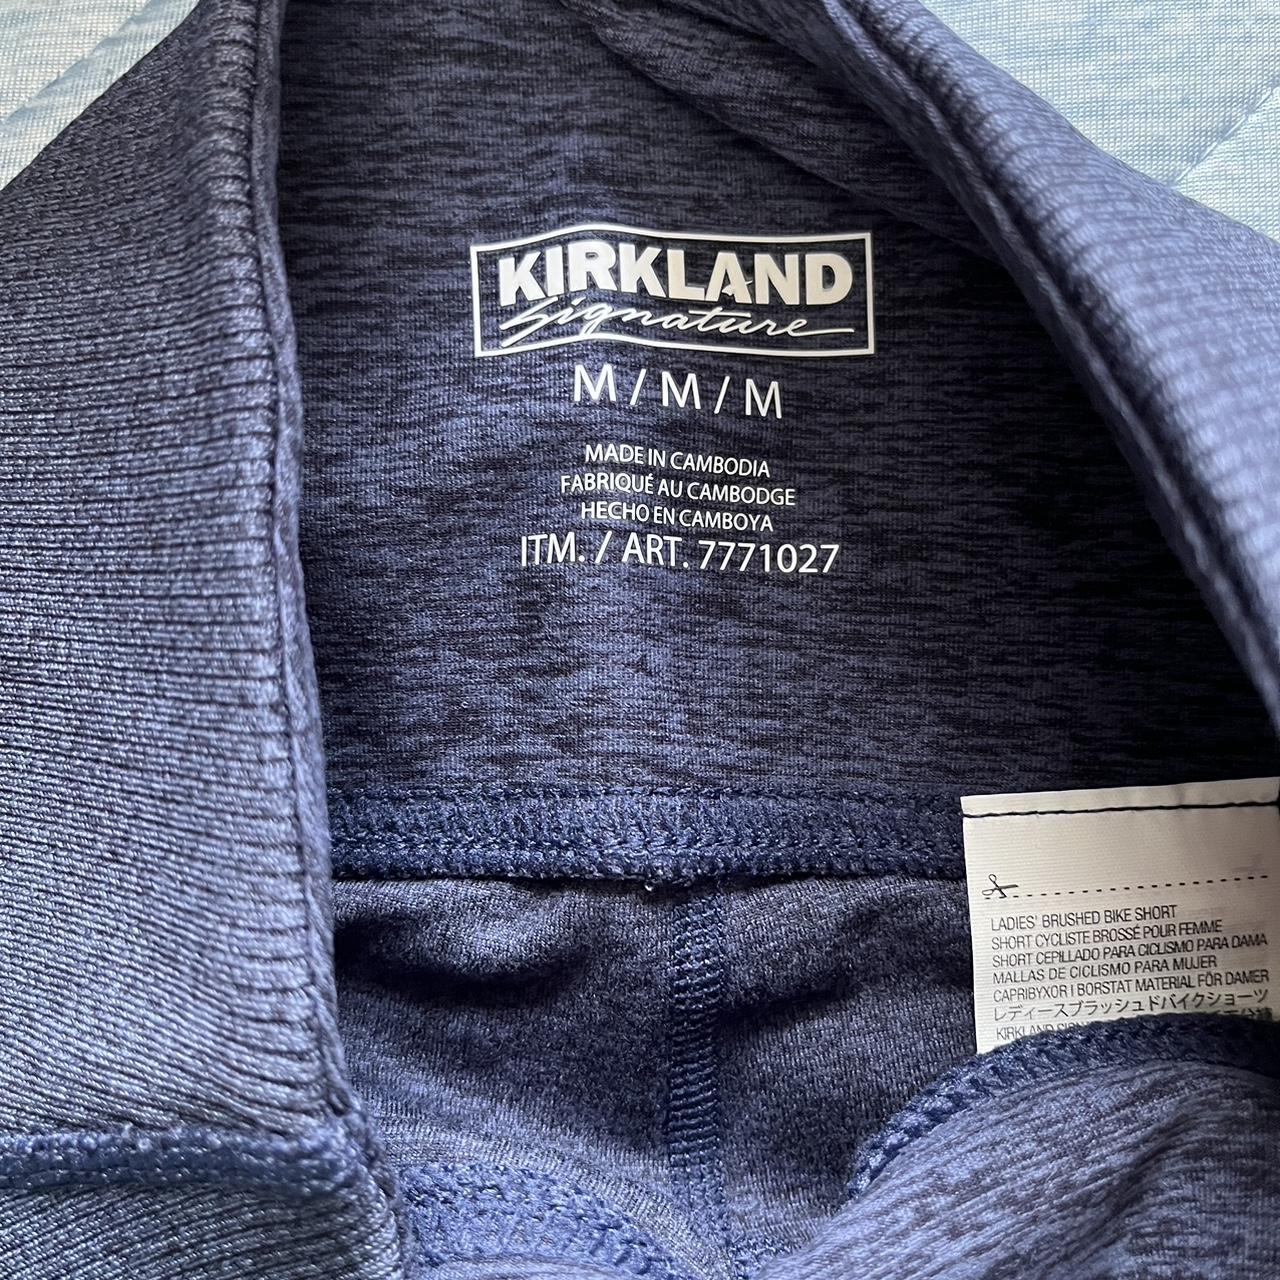 Blue/ black pattern kirkland workout pants size - Depop